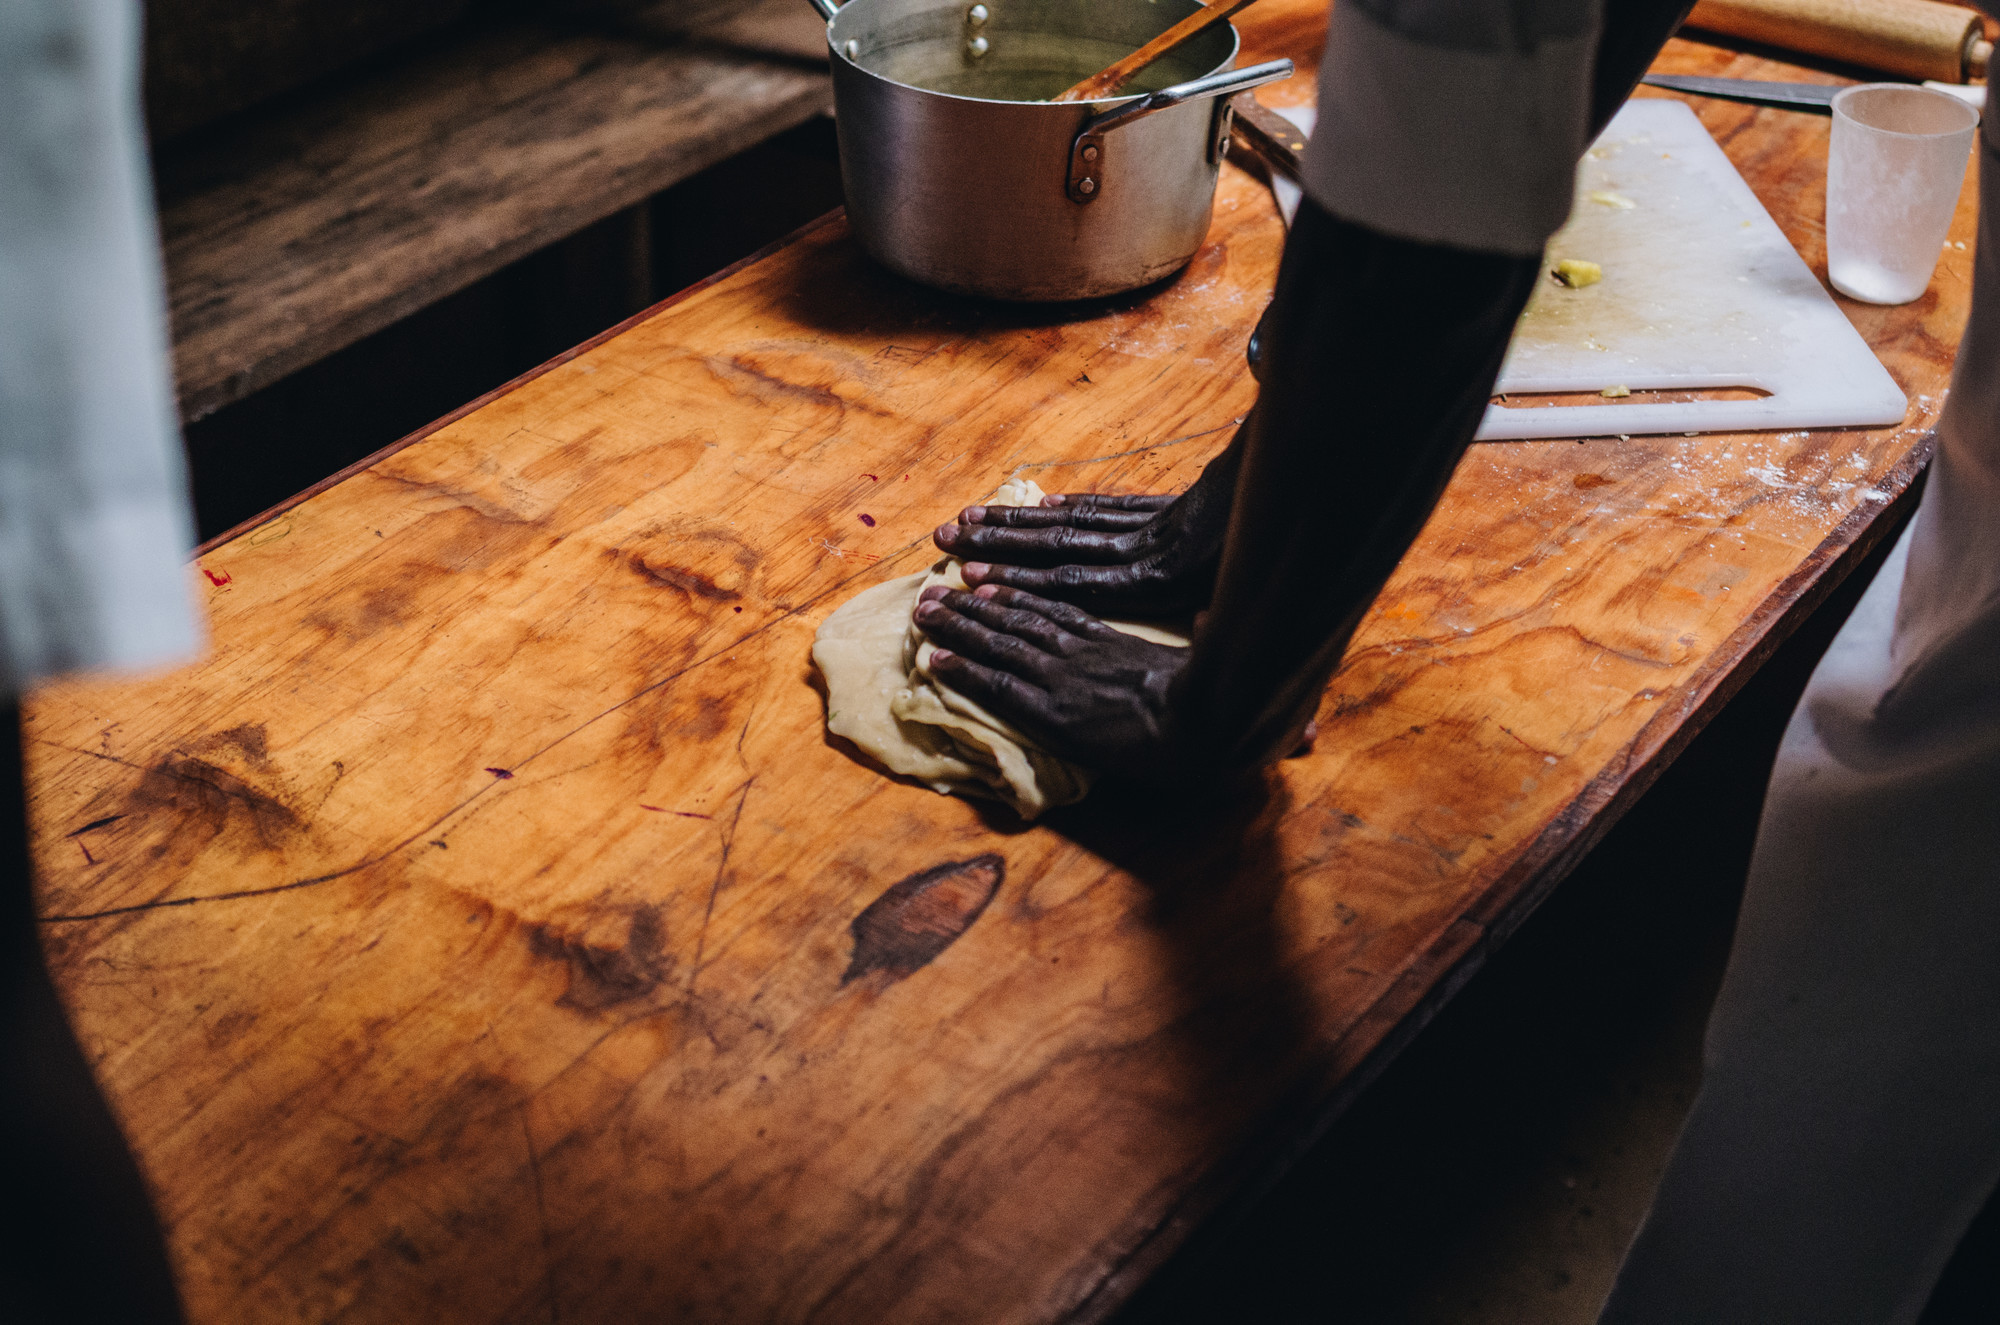 Hands kneeding dough on a wooden work surface